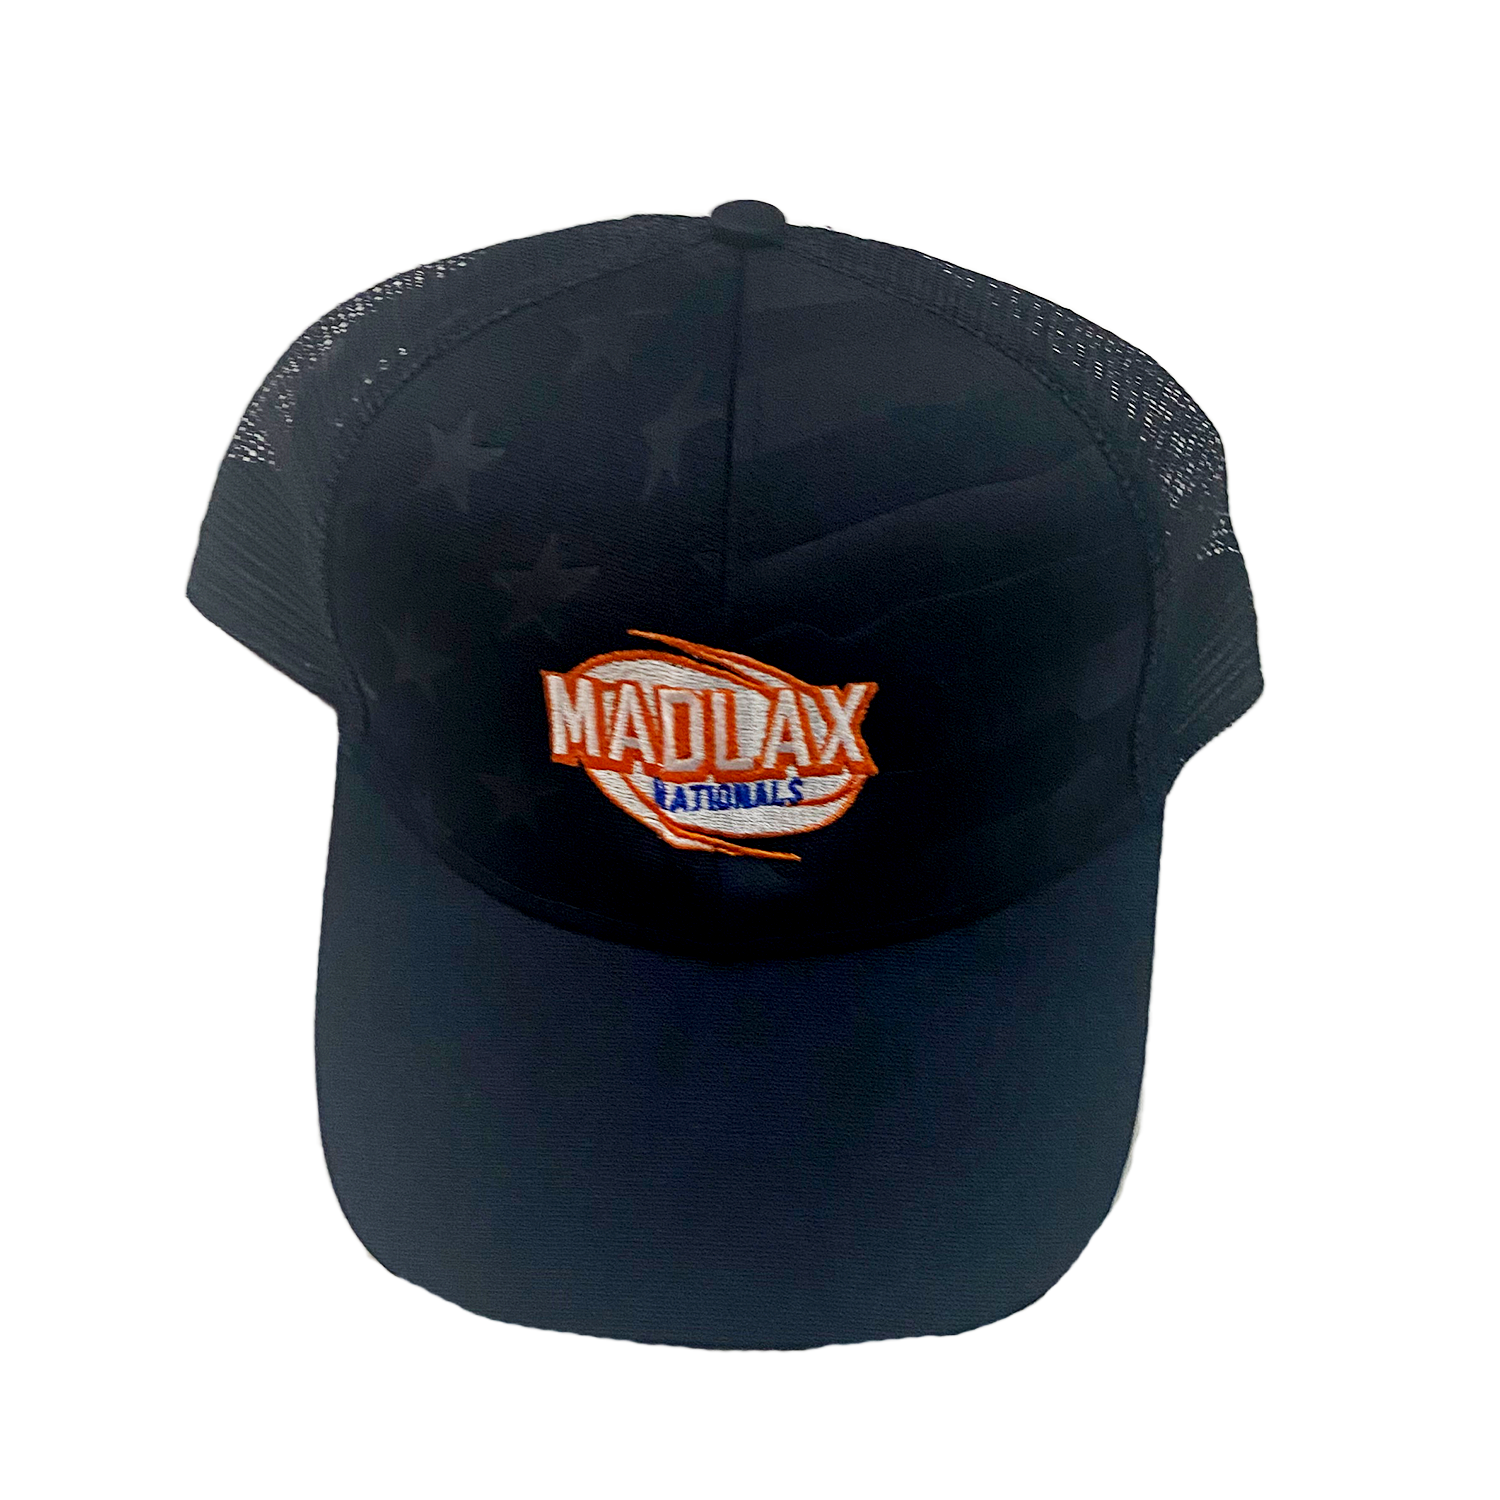 MadGear Madlax Nationals Stars & Stripes Mesh Back Hat